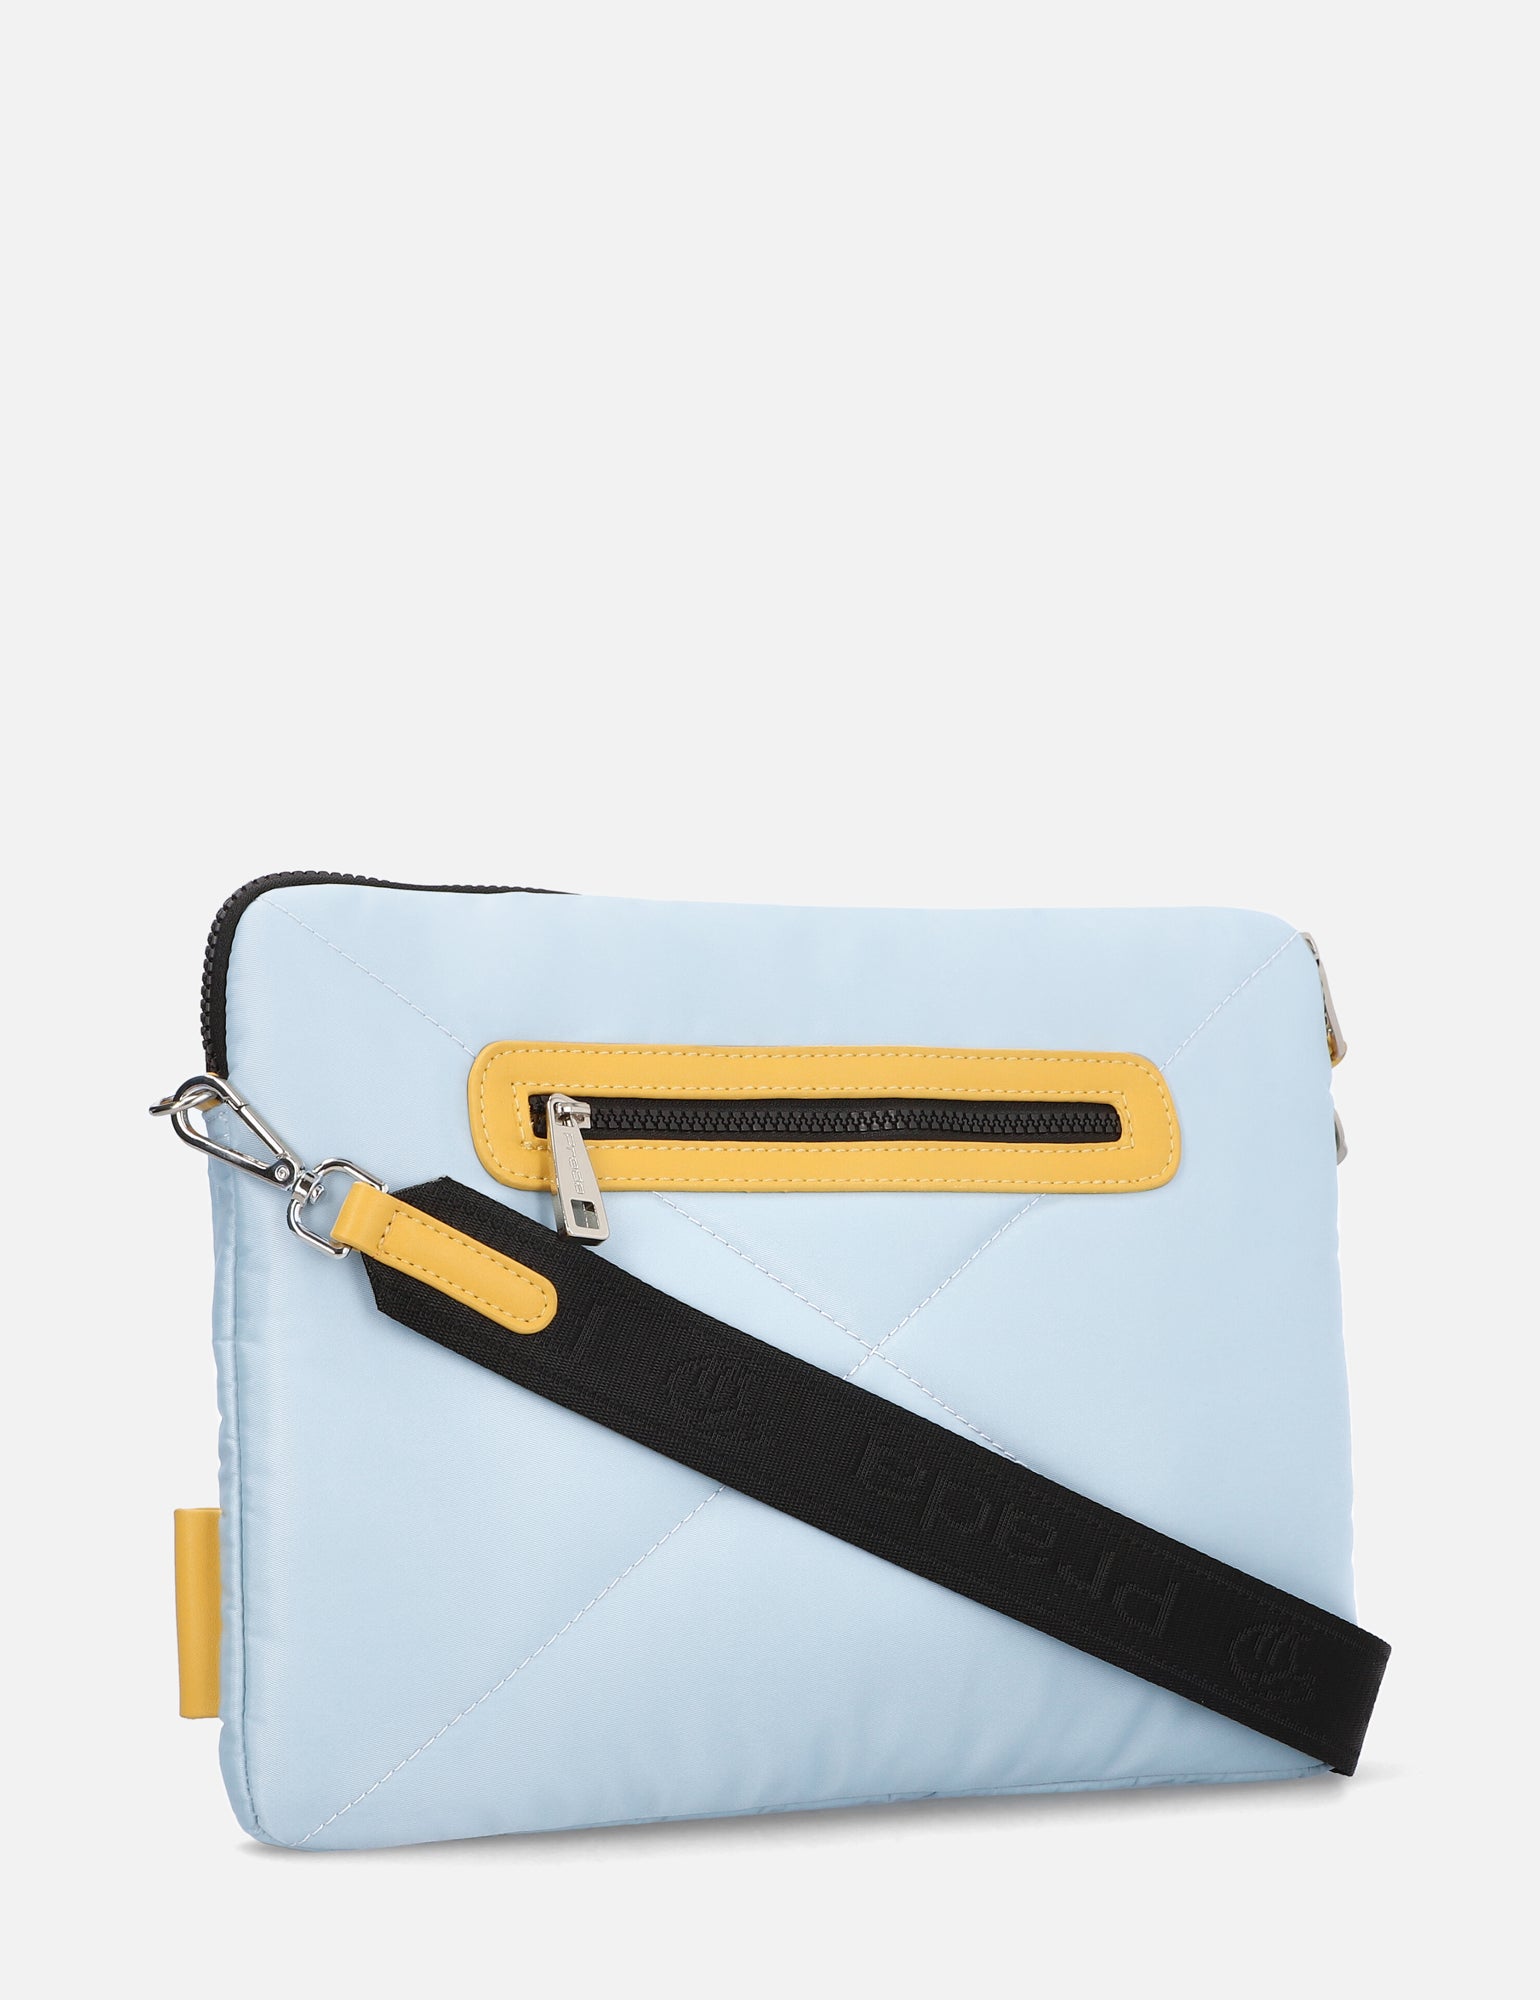 Porta laptop bandolera en nylon capitonado color azul